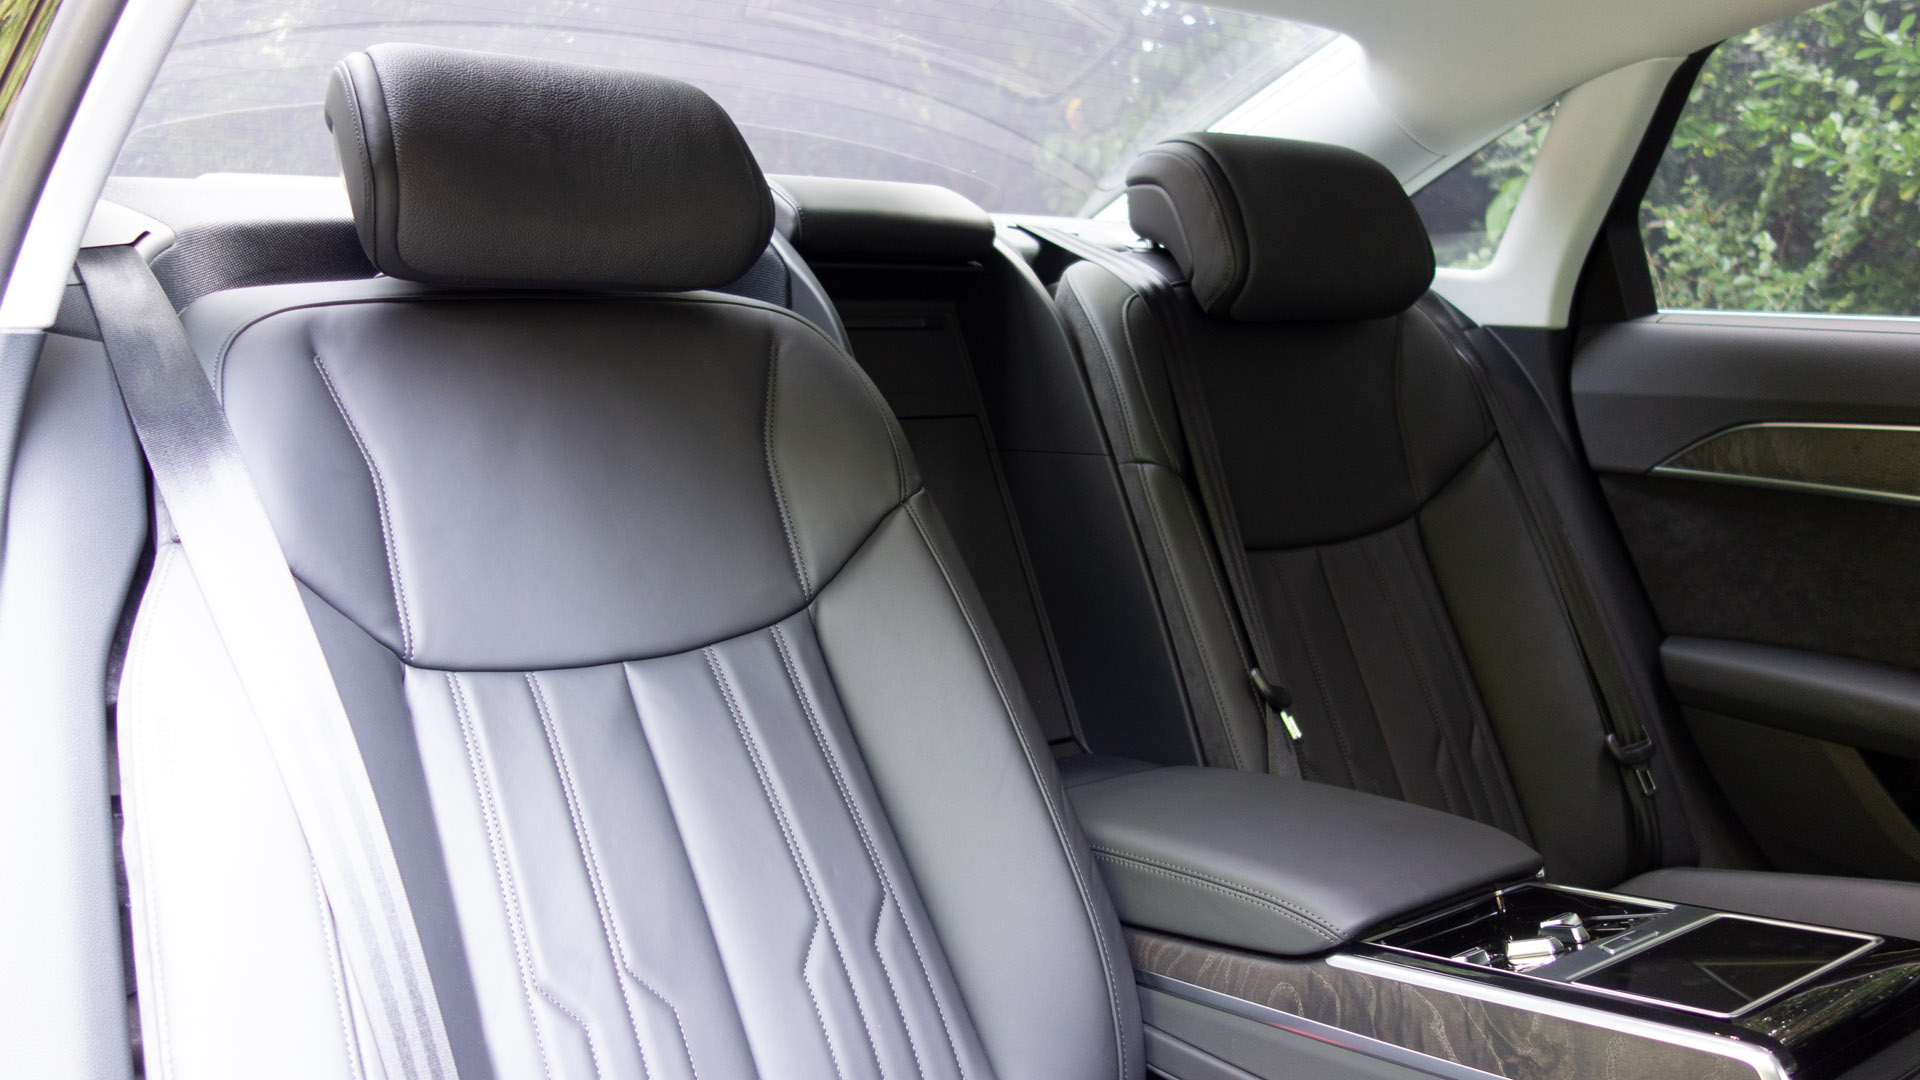 Audi A8 seat comfort